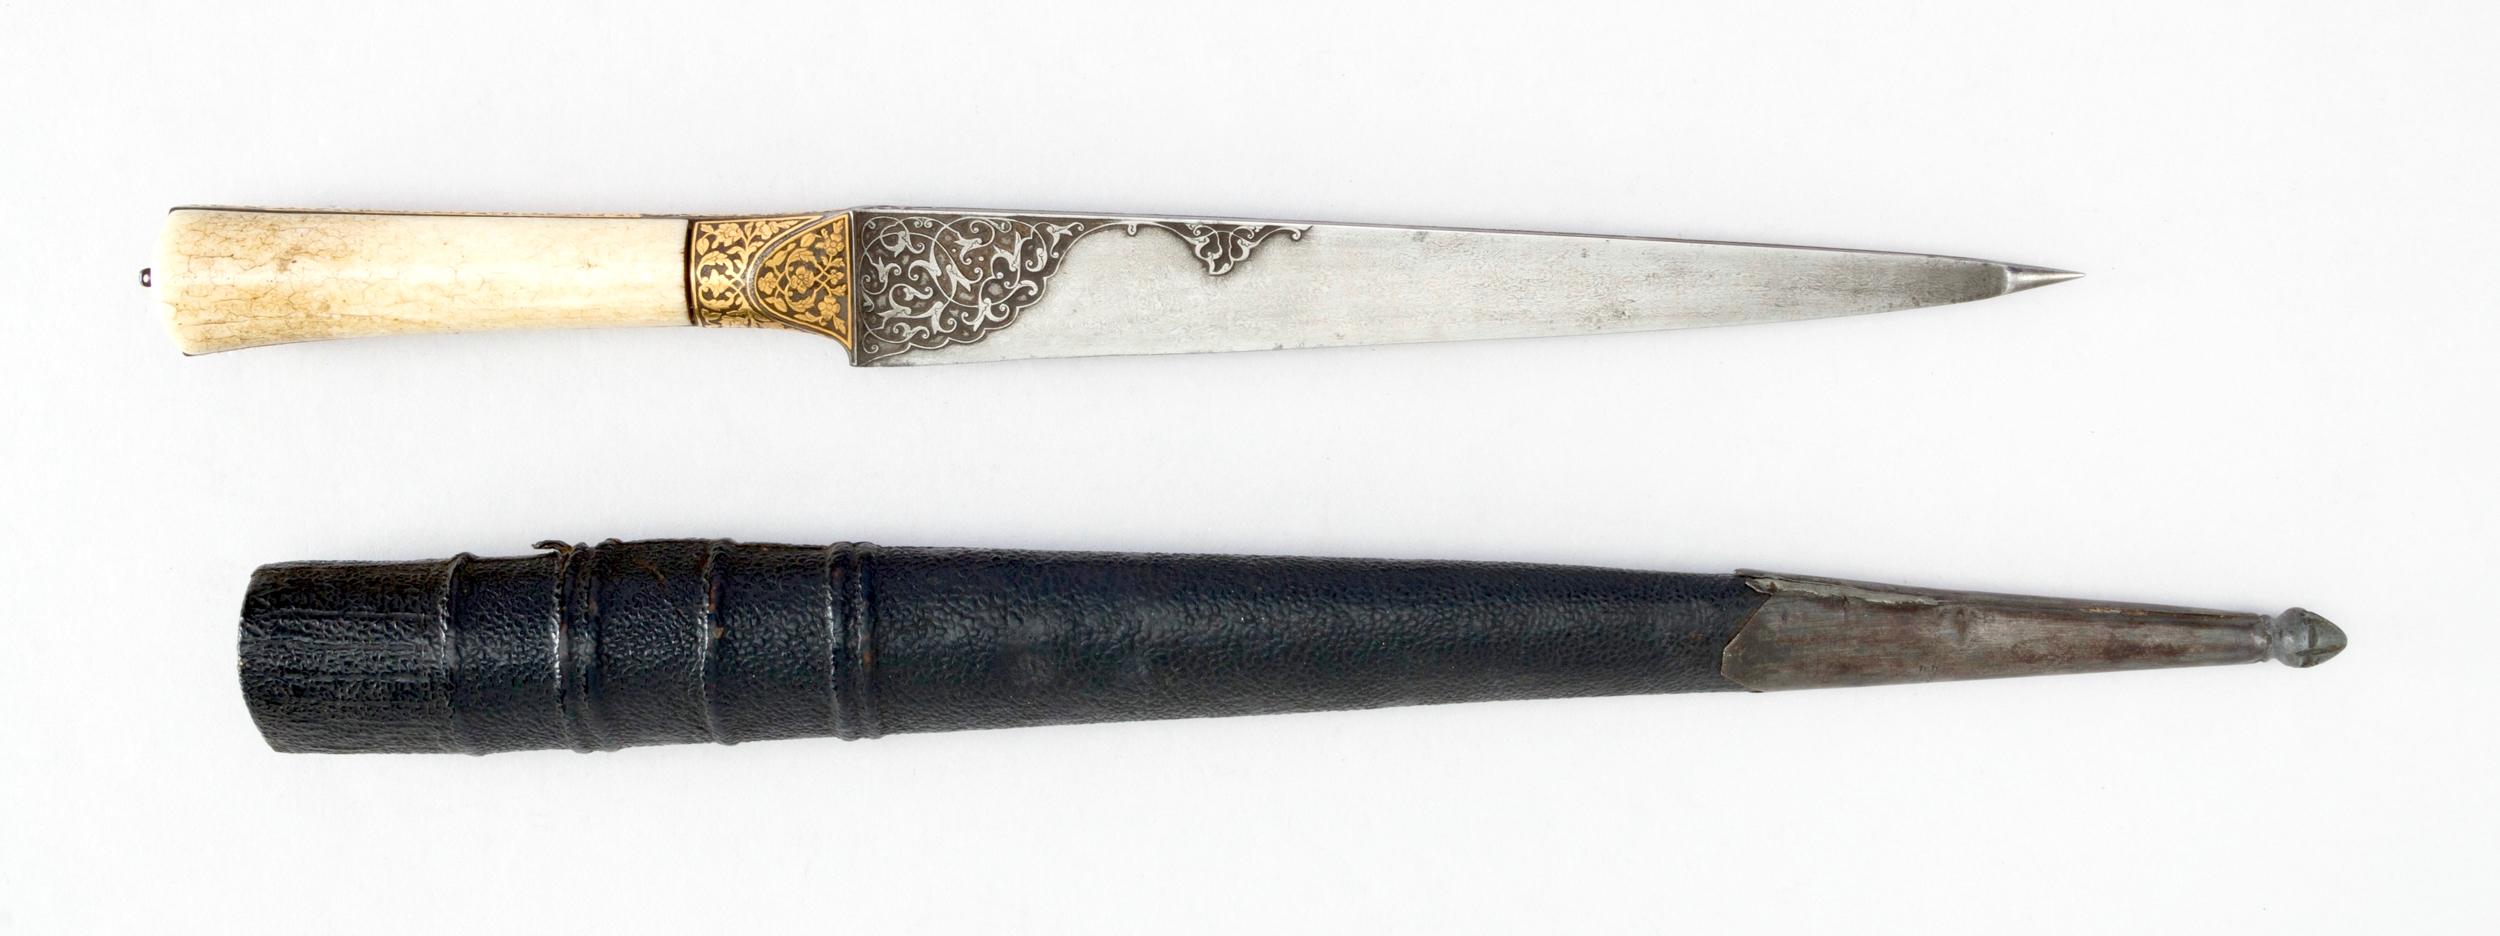 Persian kard dagger